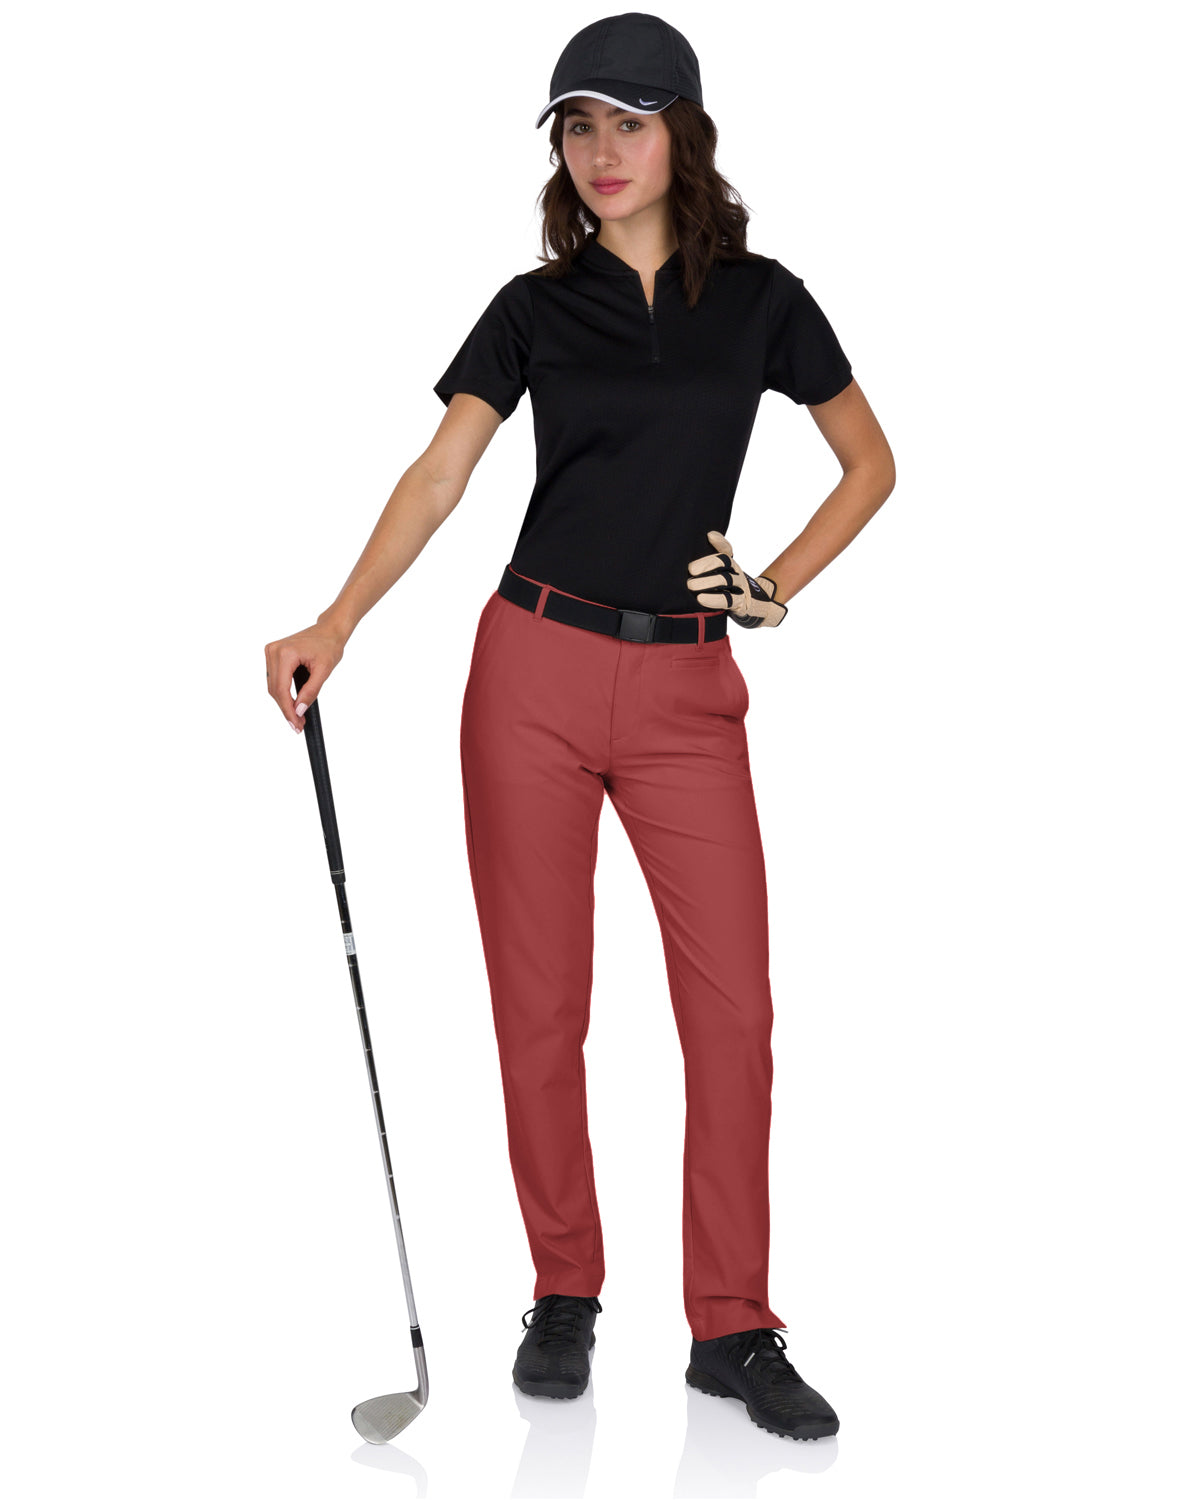 Relco Mens Tweed Multi Check Sta-Press Mod Golf Trousers | eBay